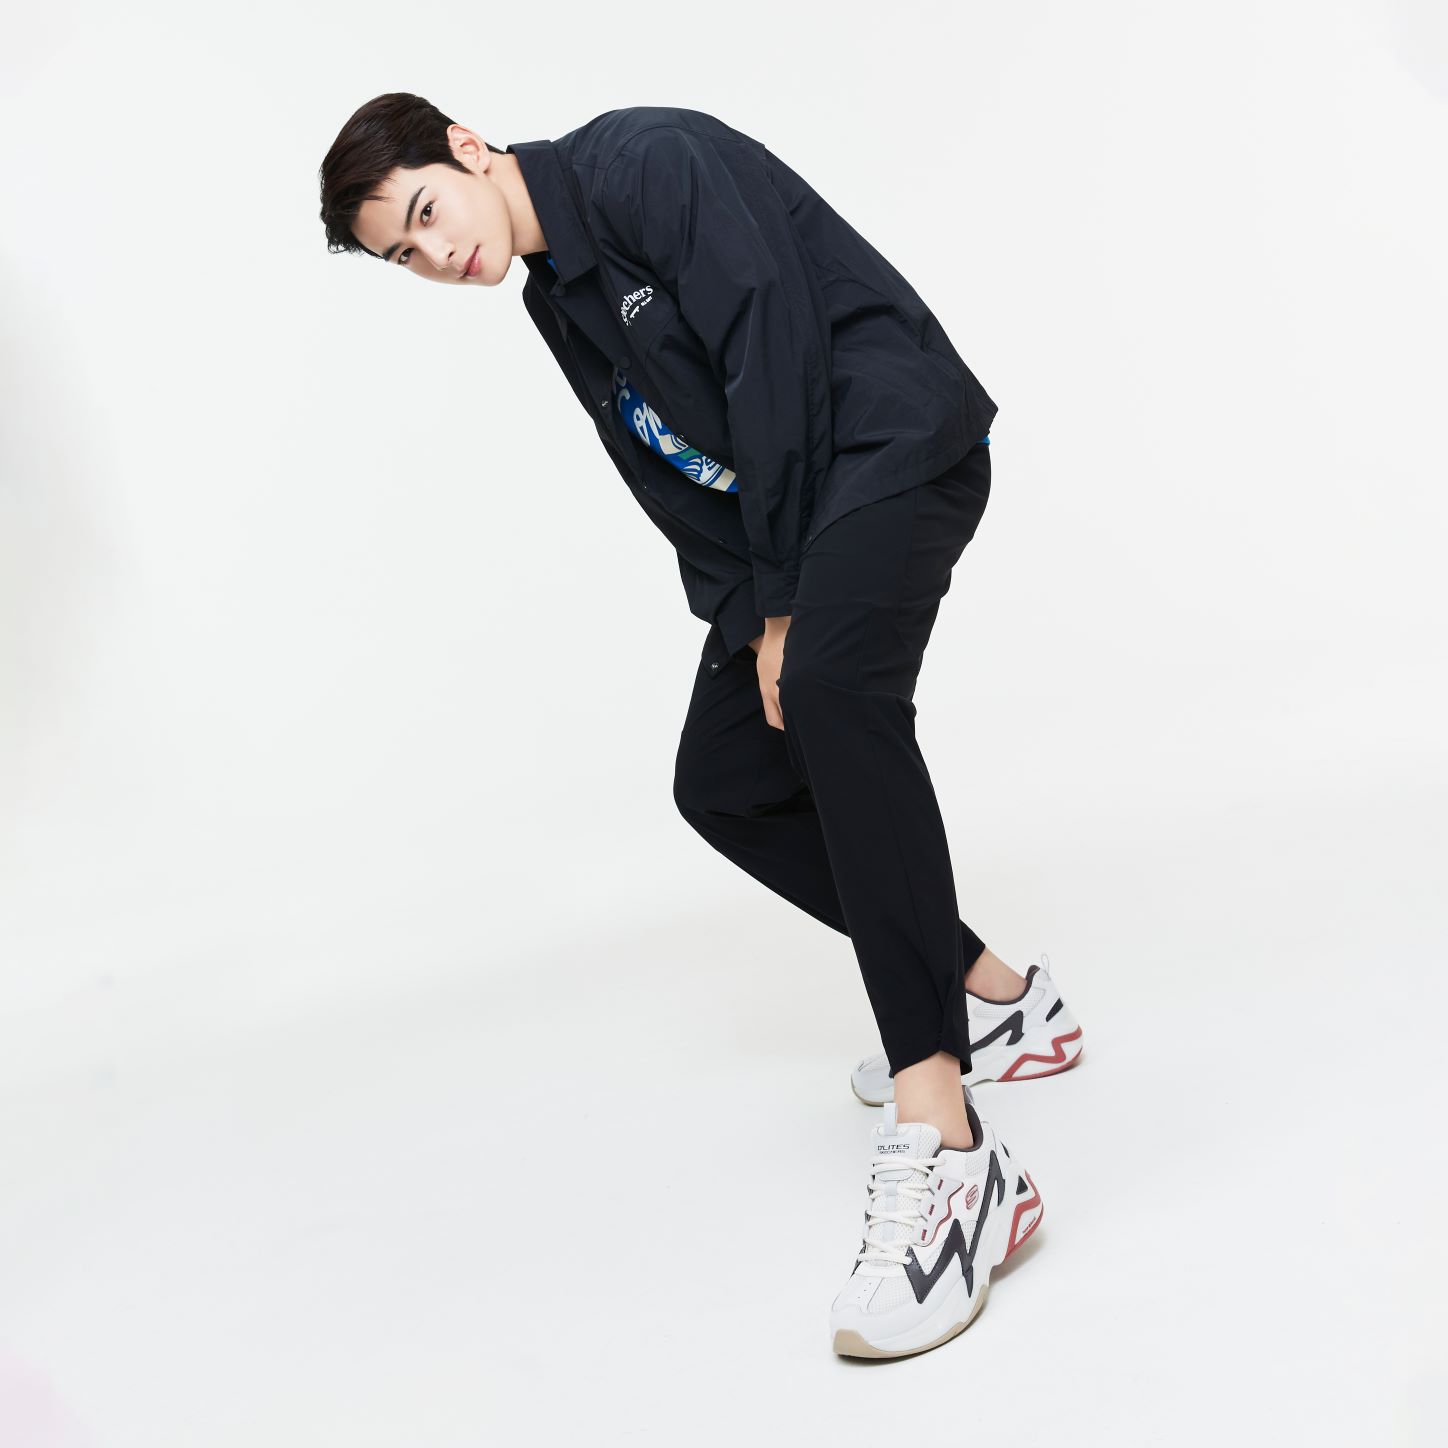 Skechers Woos Top South Korean Pop Idol,Cha Eun-Woo, To Be Its New